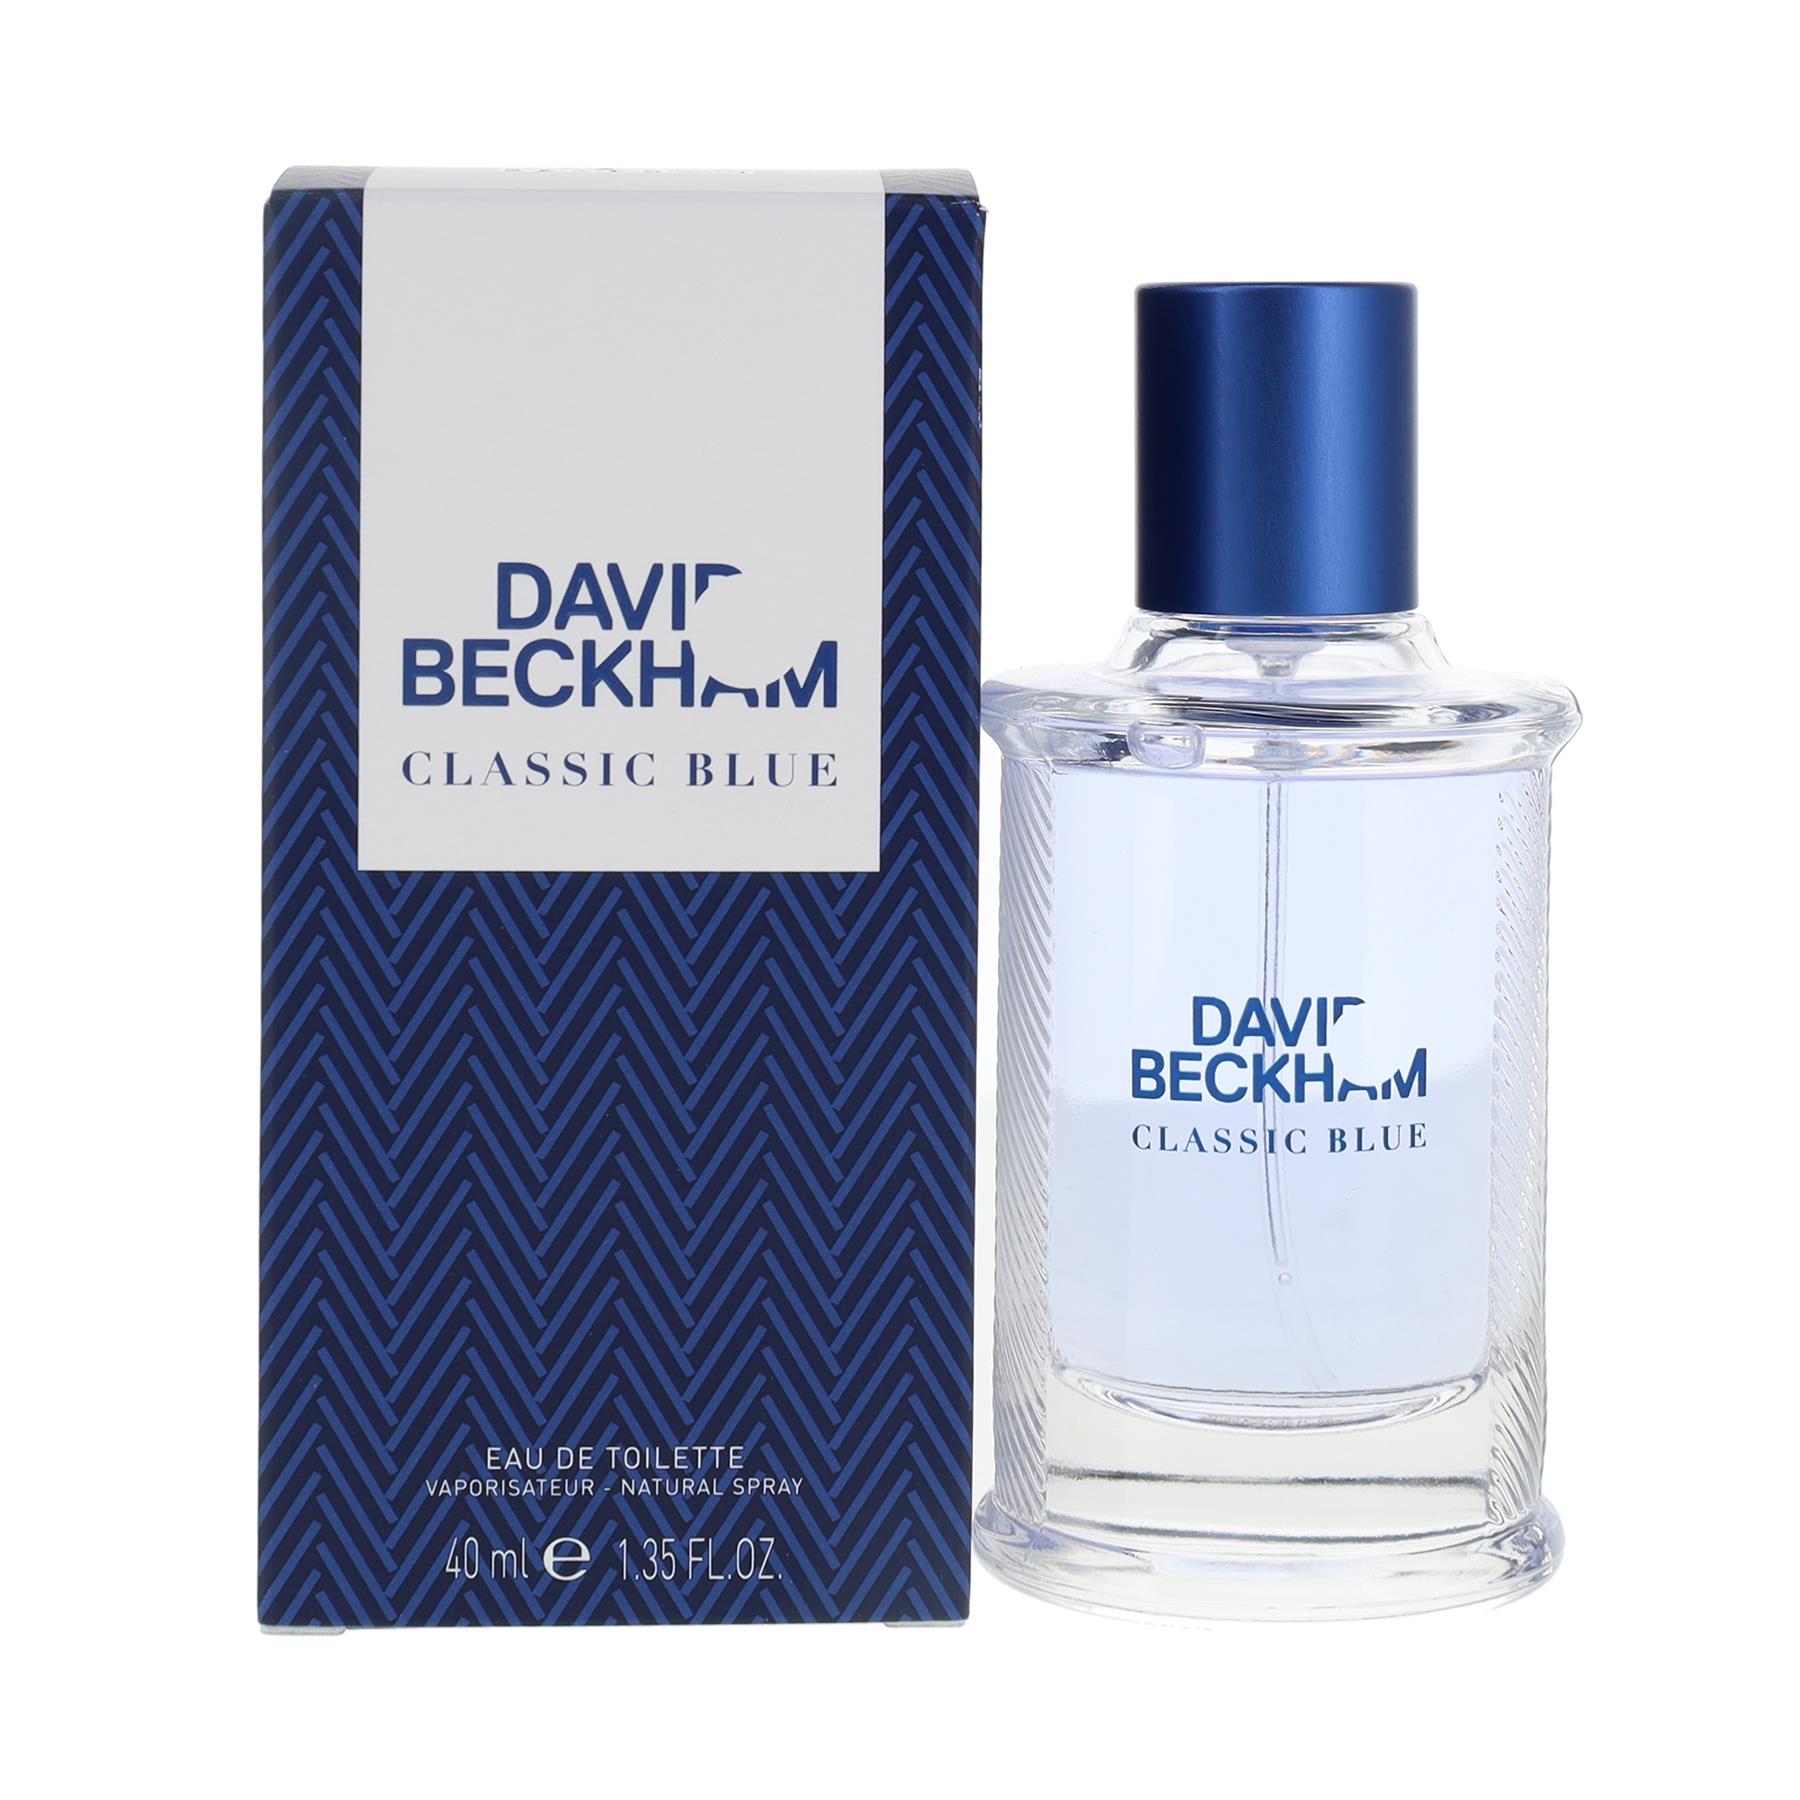 David Beckham Classic Blue 40ml Eau de Toilette Spray for Him from Perfume Plus Direct